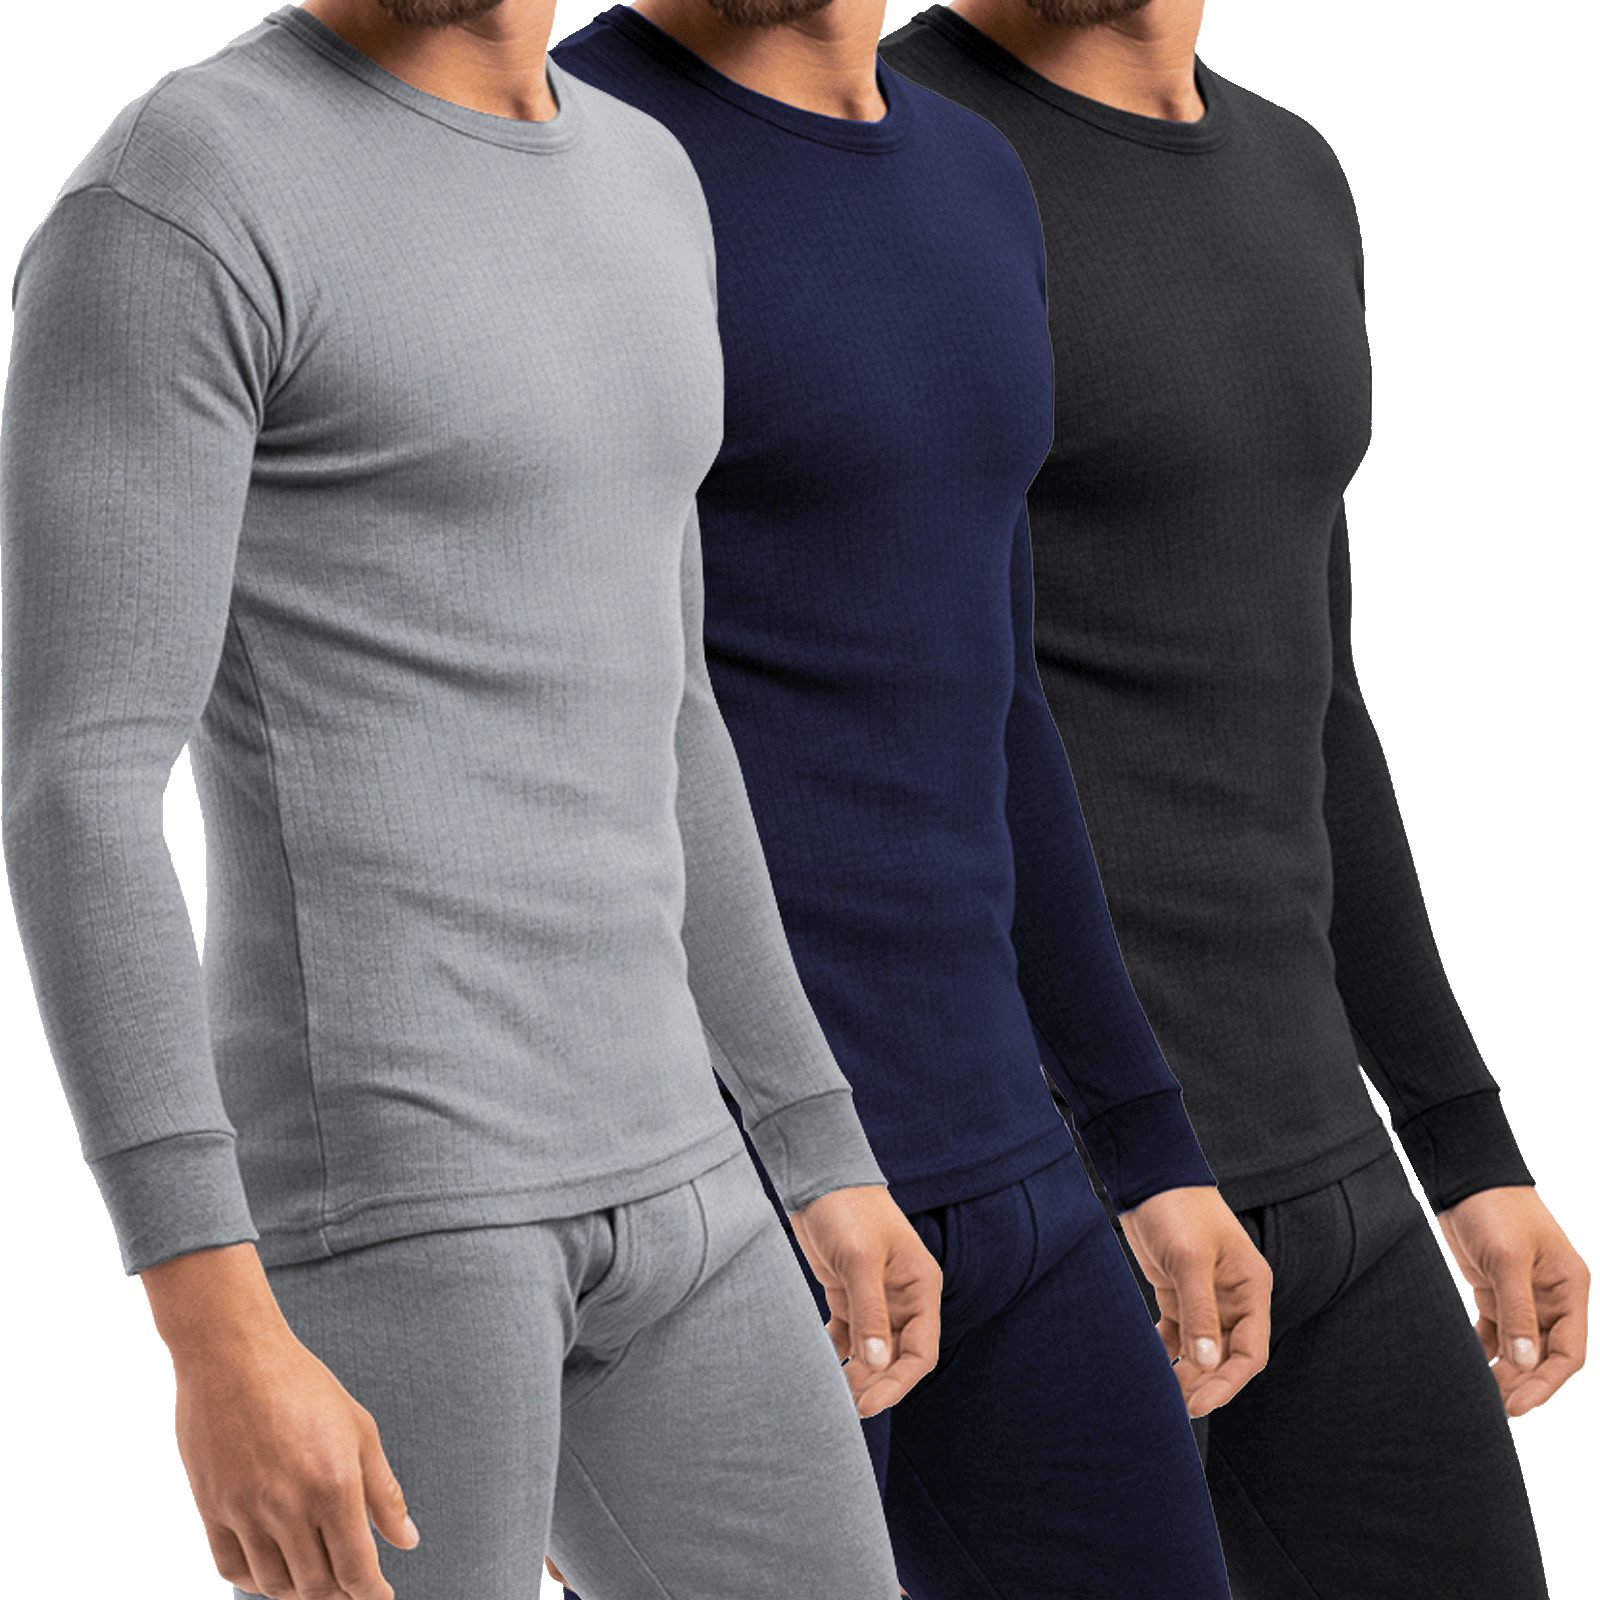 BOOSTER Markenwarenshop-Style Langarm Herrenunterhemd Thermo 3 x HEAT XXL Größe: Shirt Thermounterhemd